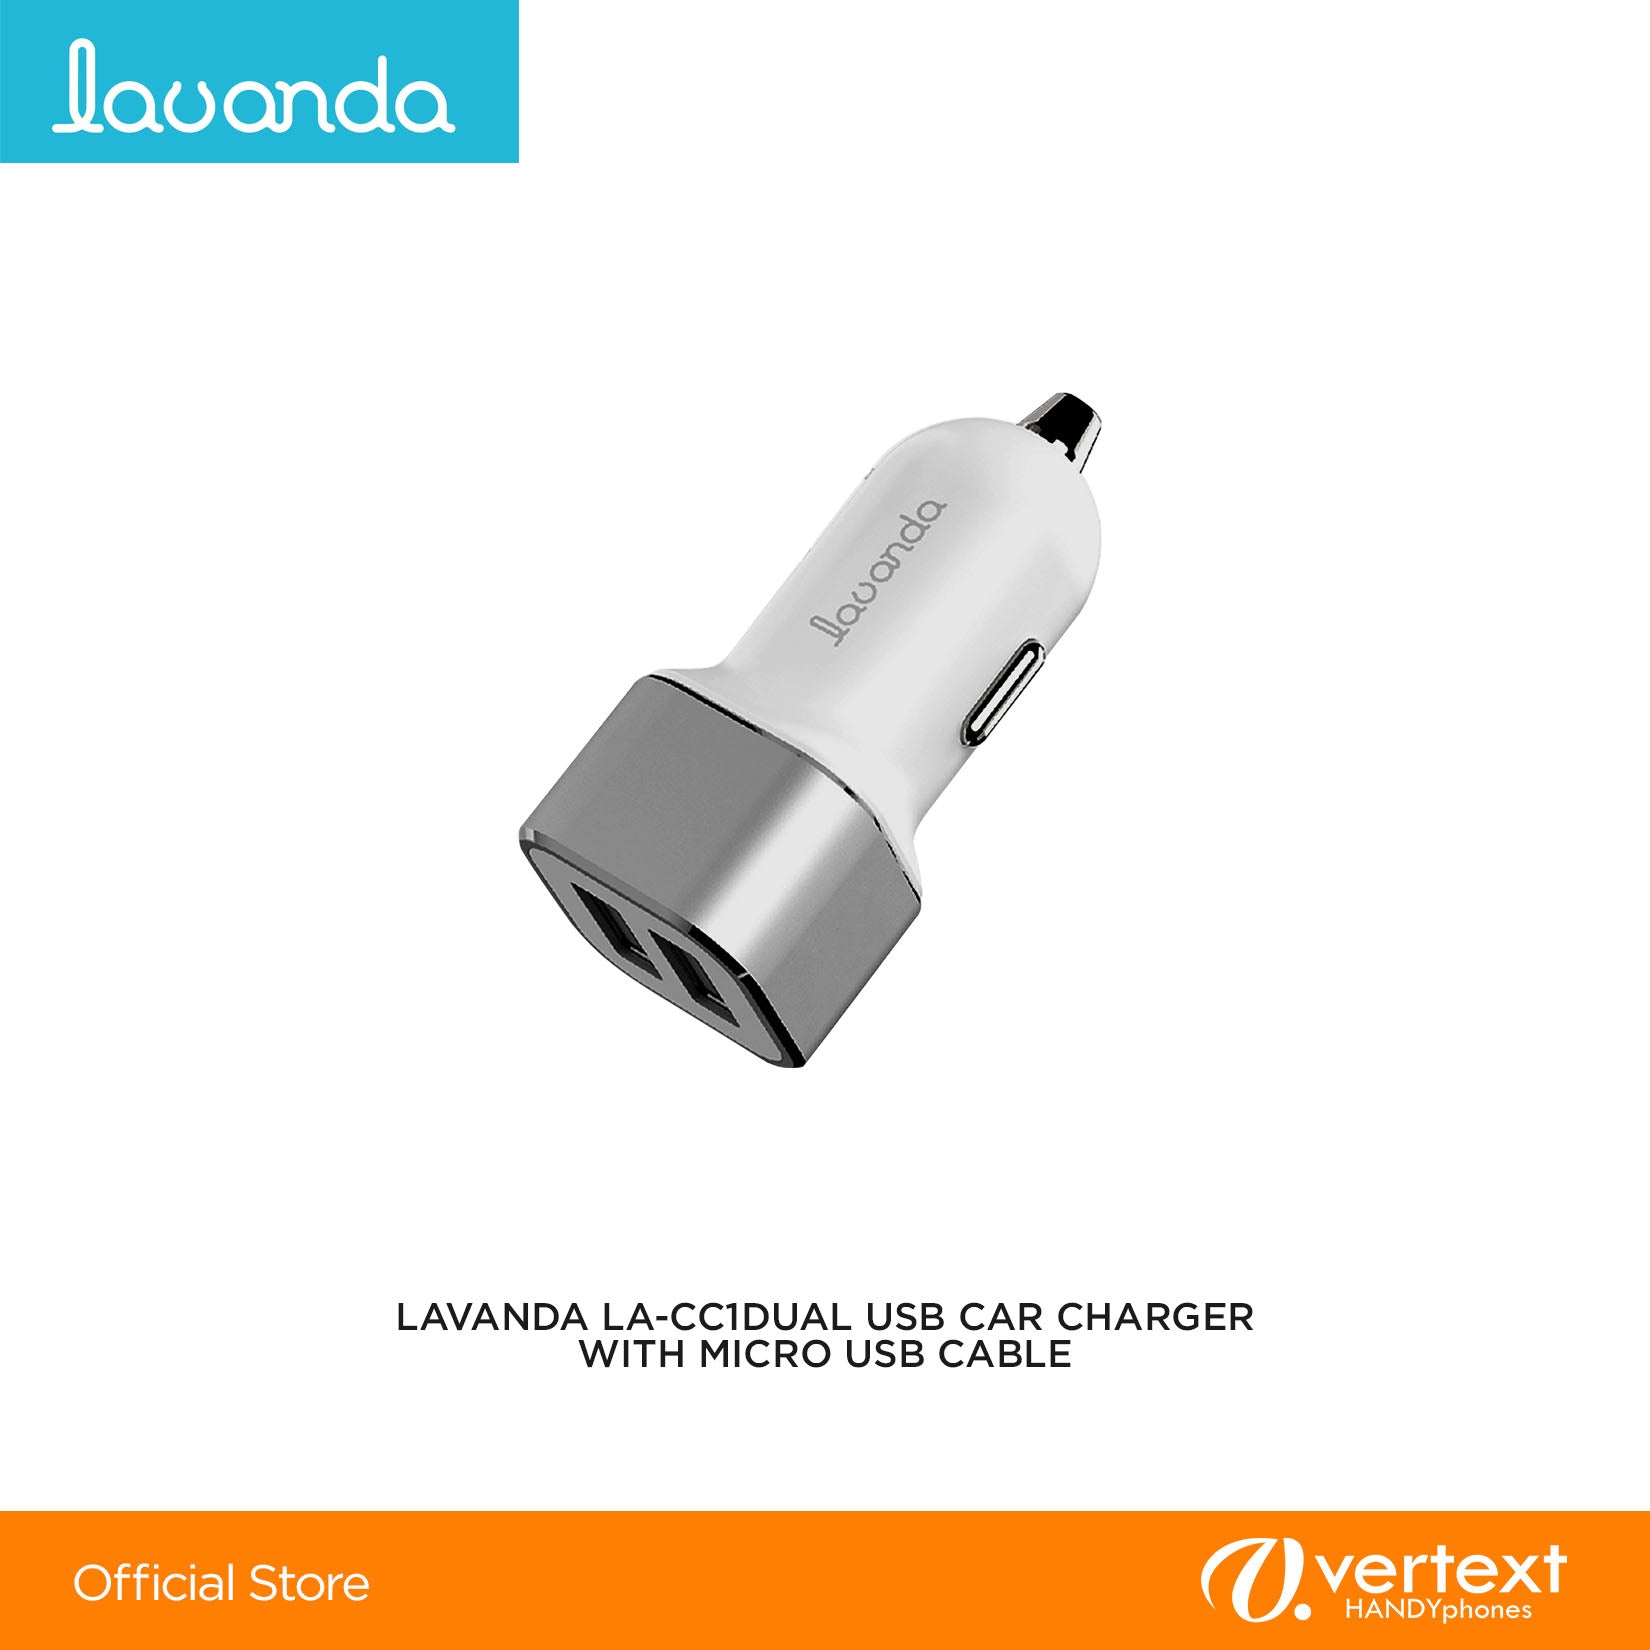 Lavanda LA-CC1Dual USB Car Charger with Micro USB Cable GREY